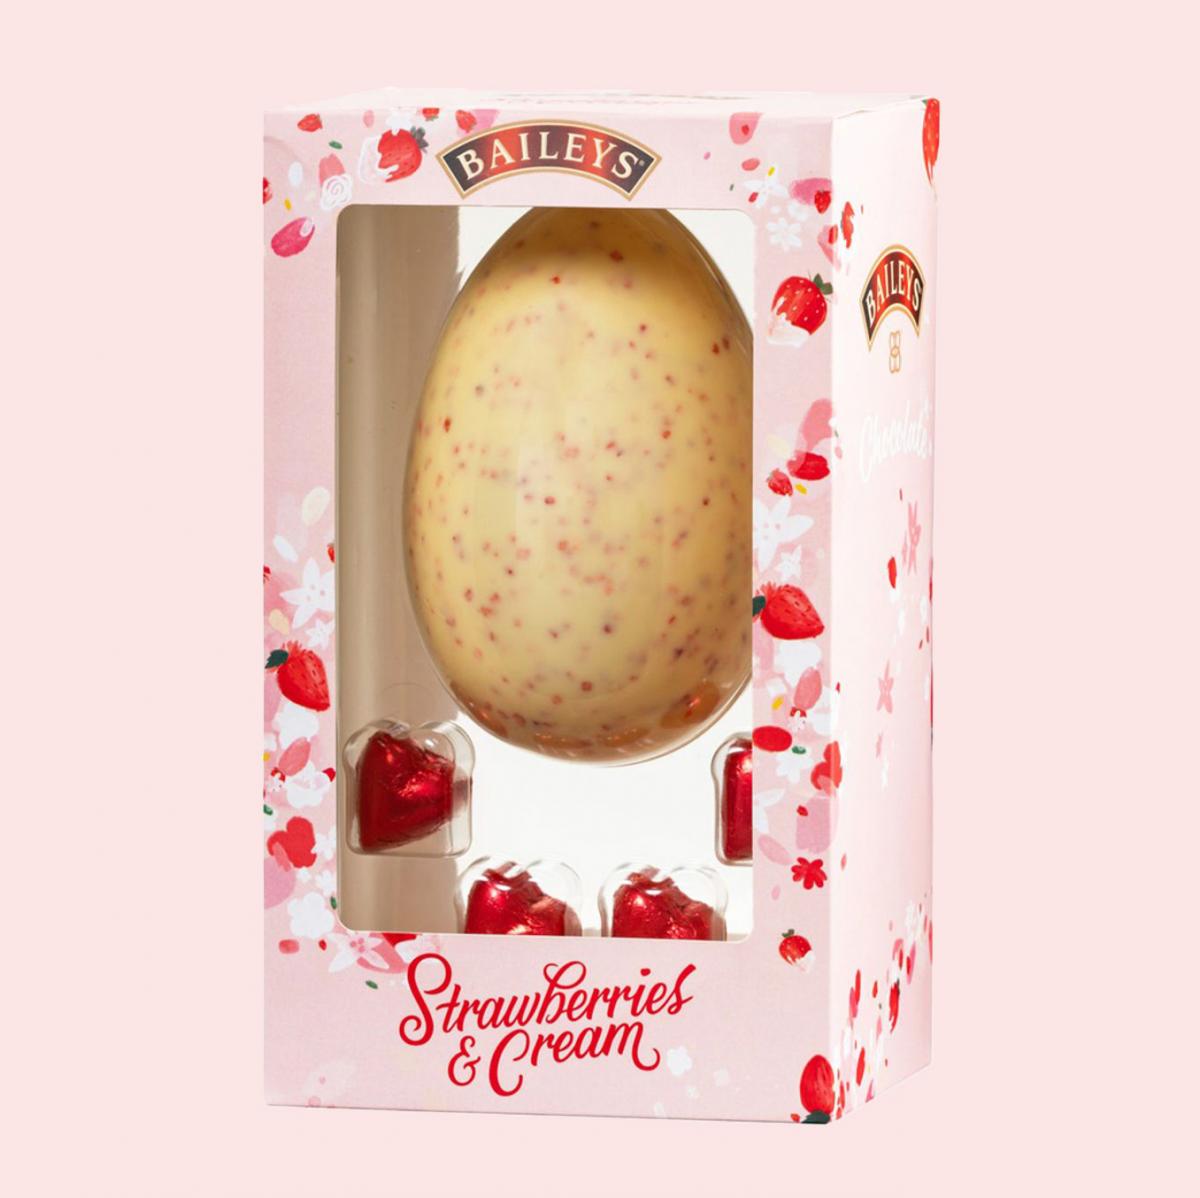 Baileys Strawberries & Cream Chokladgg